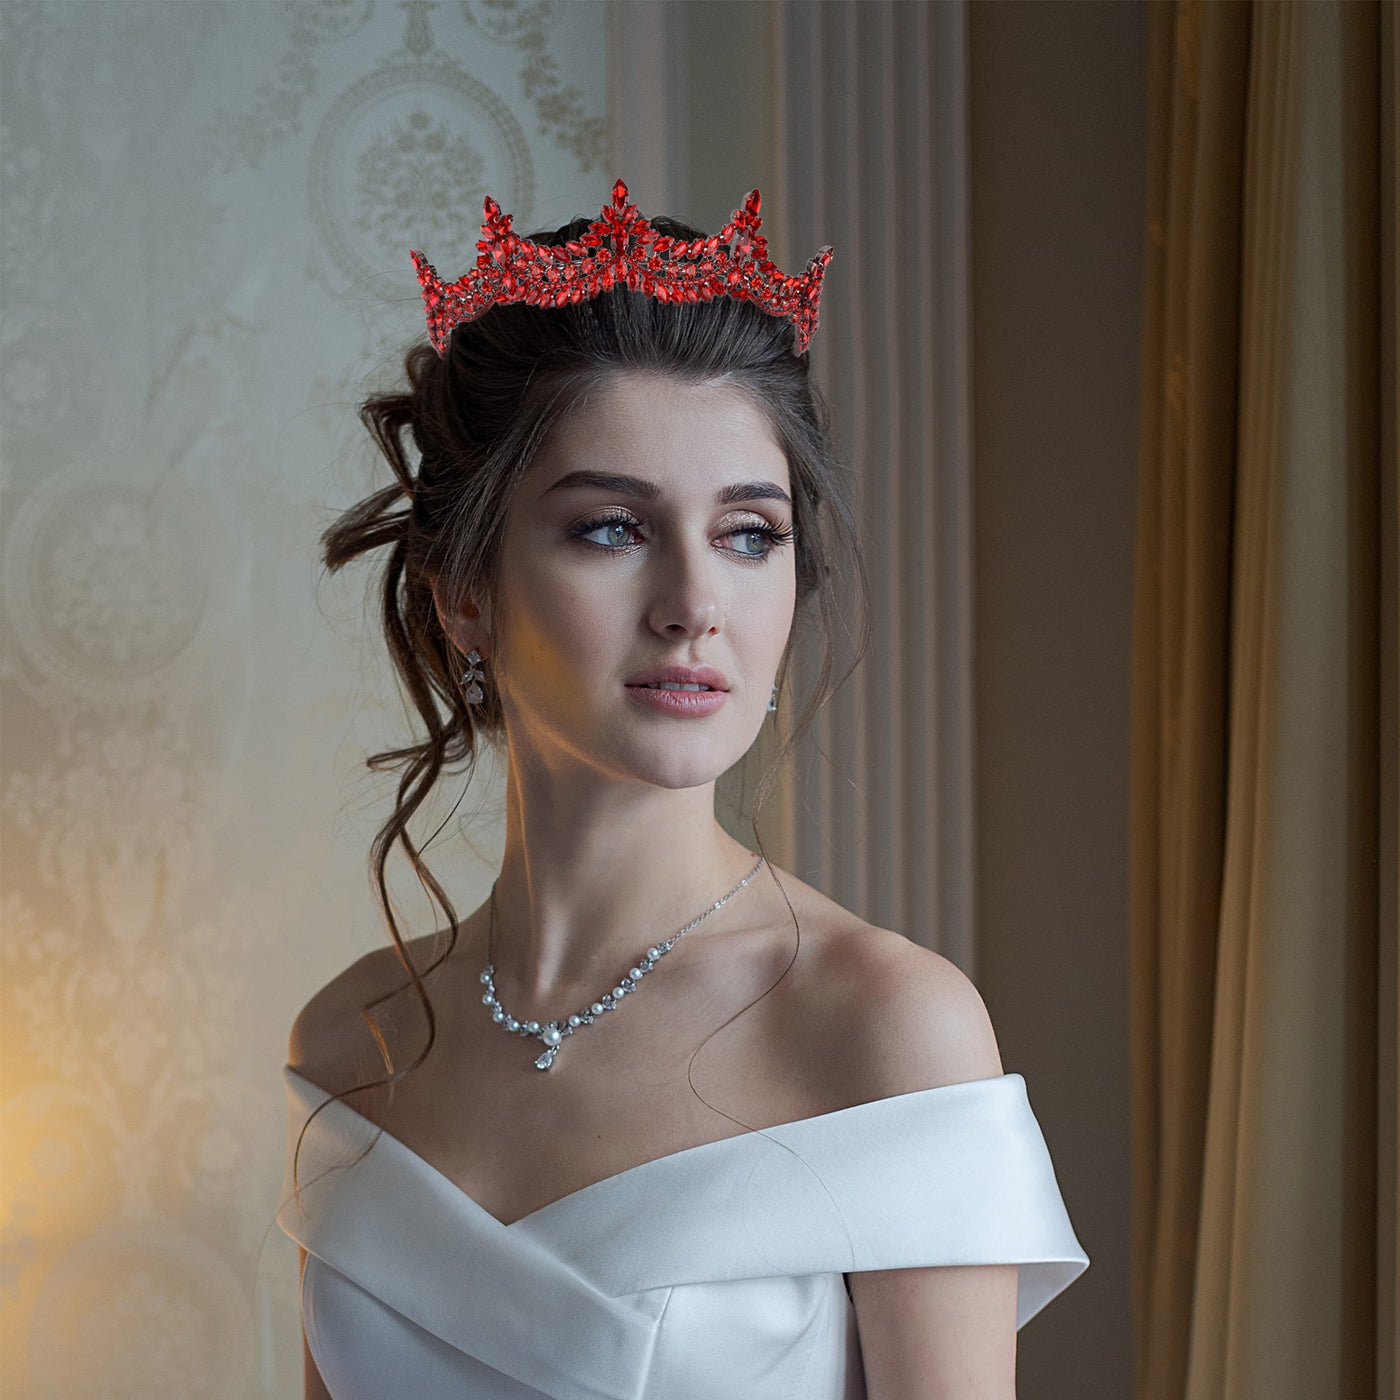 Elegant Vintage Crystal Wedding Crown Special Wedding Crown for Brides